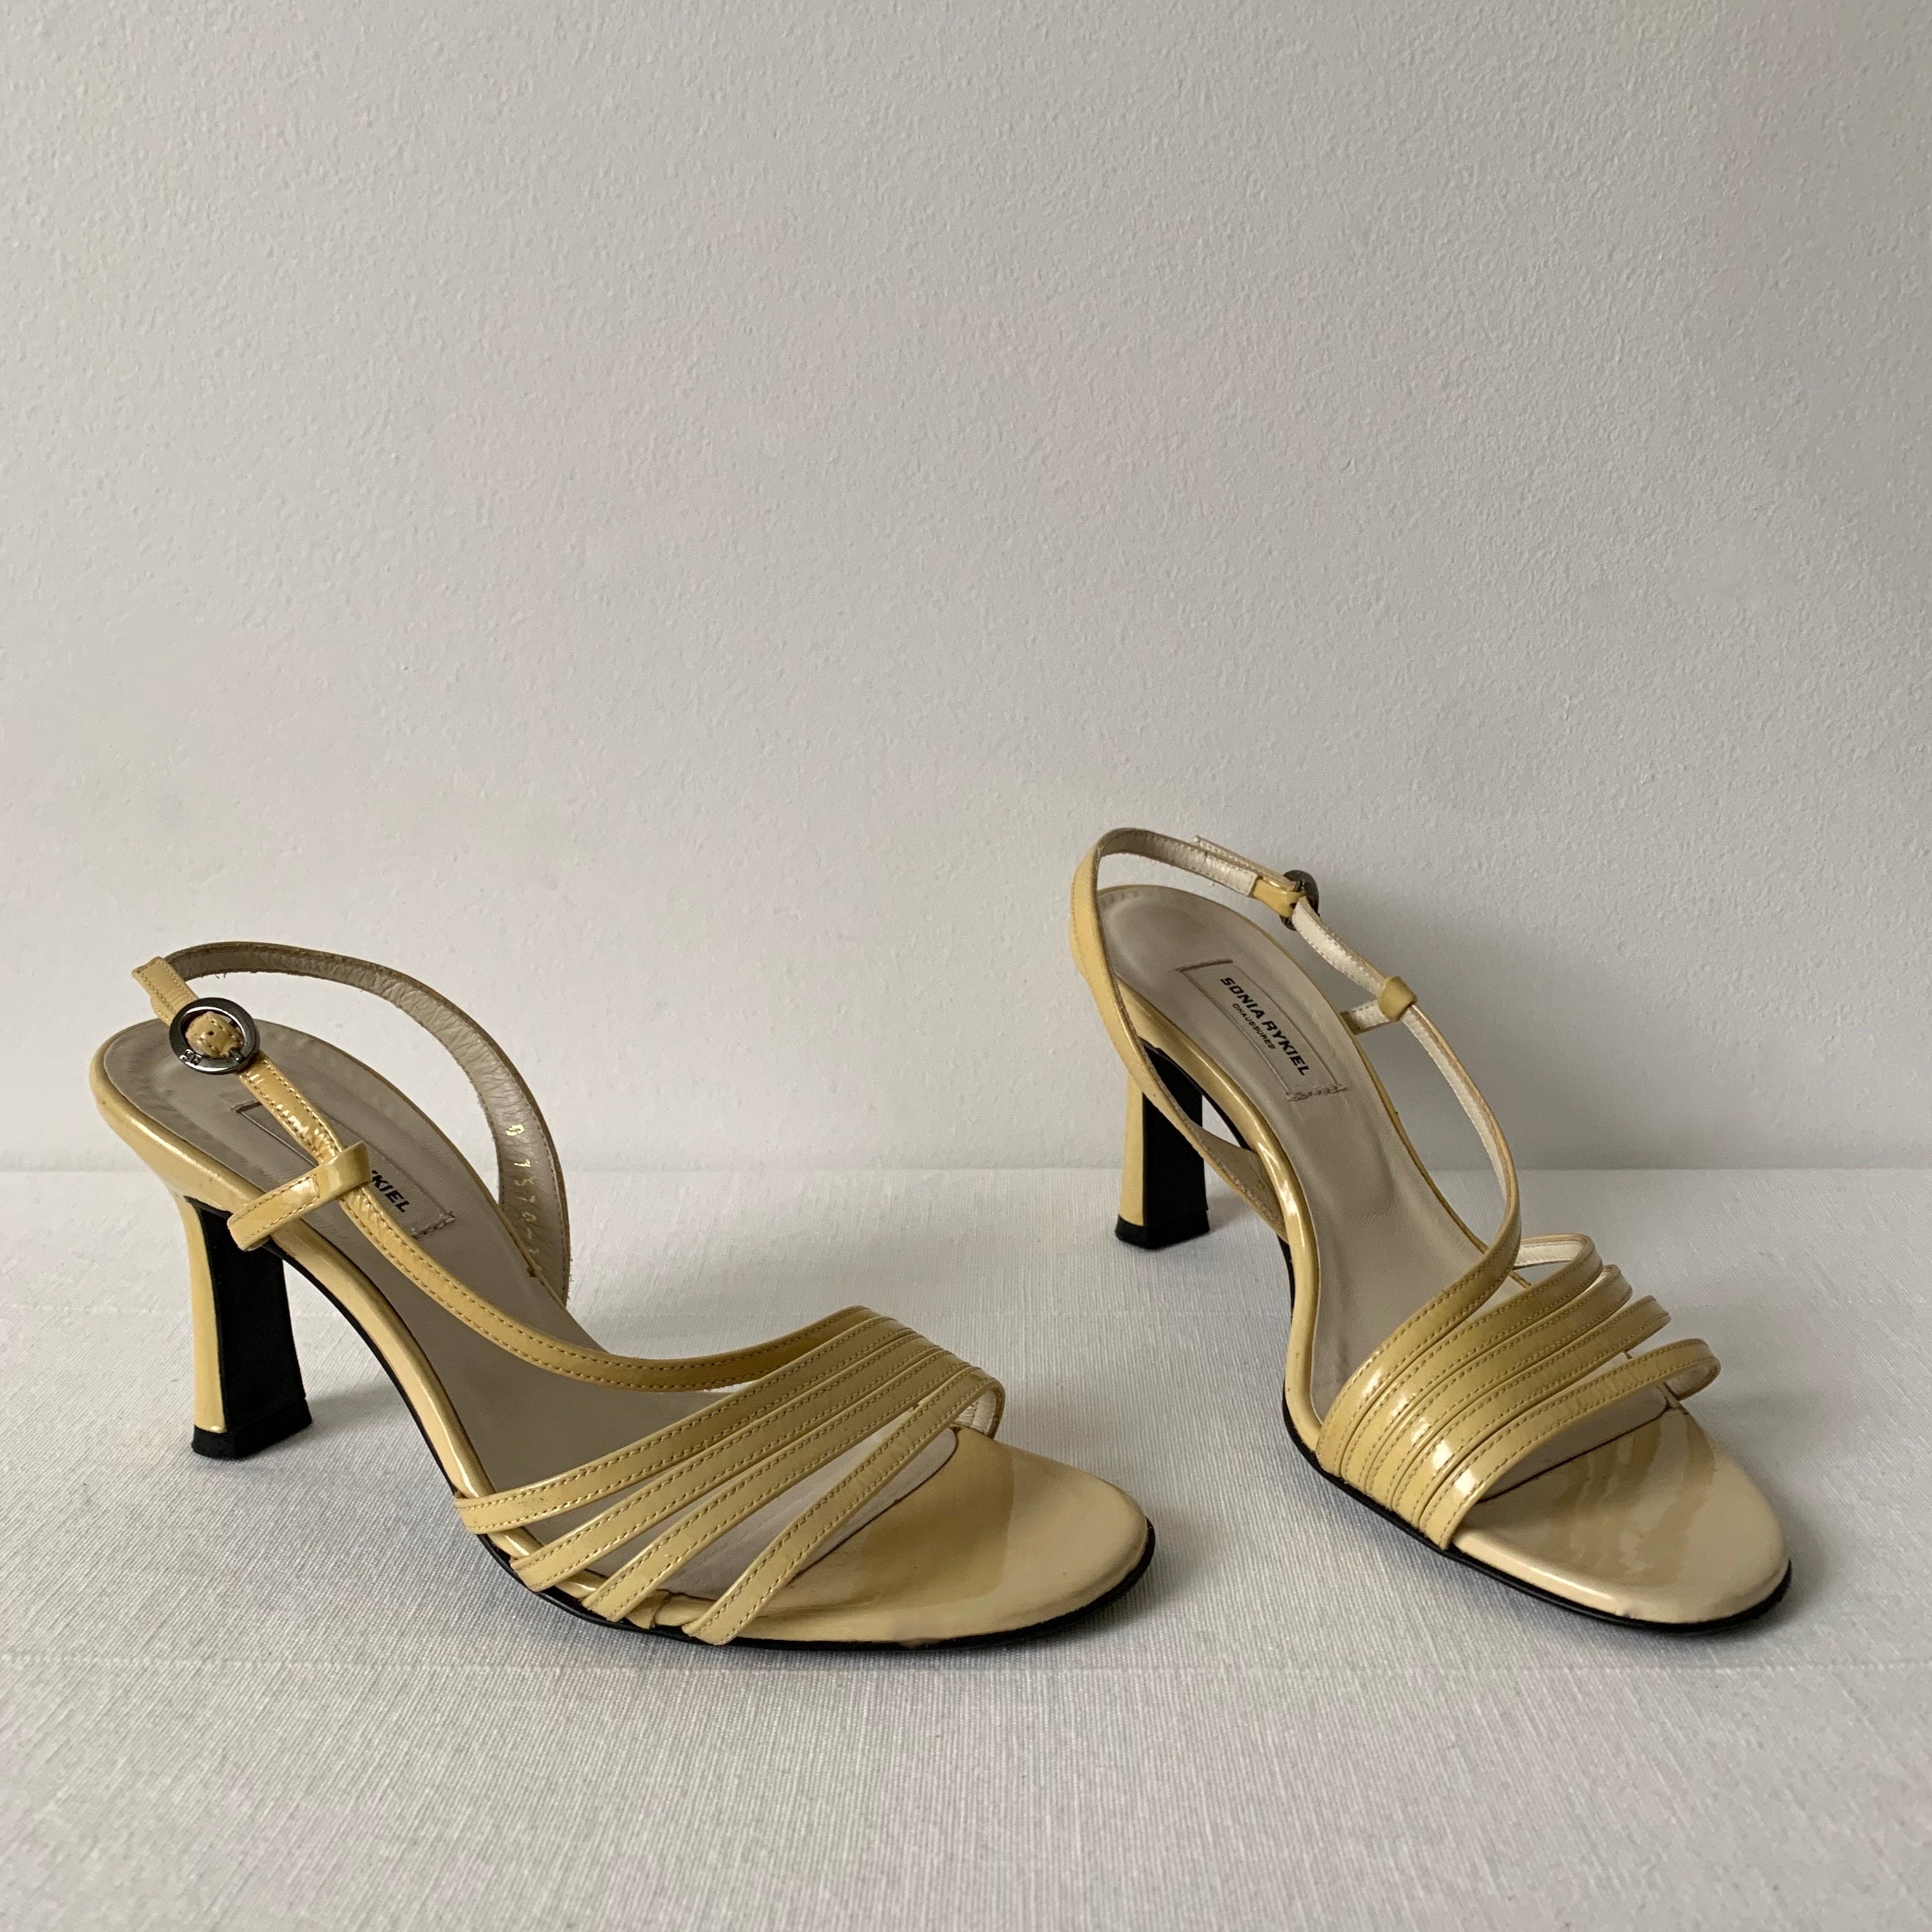 SONIA RYKIEL Strappy Yellow Heels Patent Leather Sandals EU 35 - Etsy